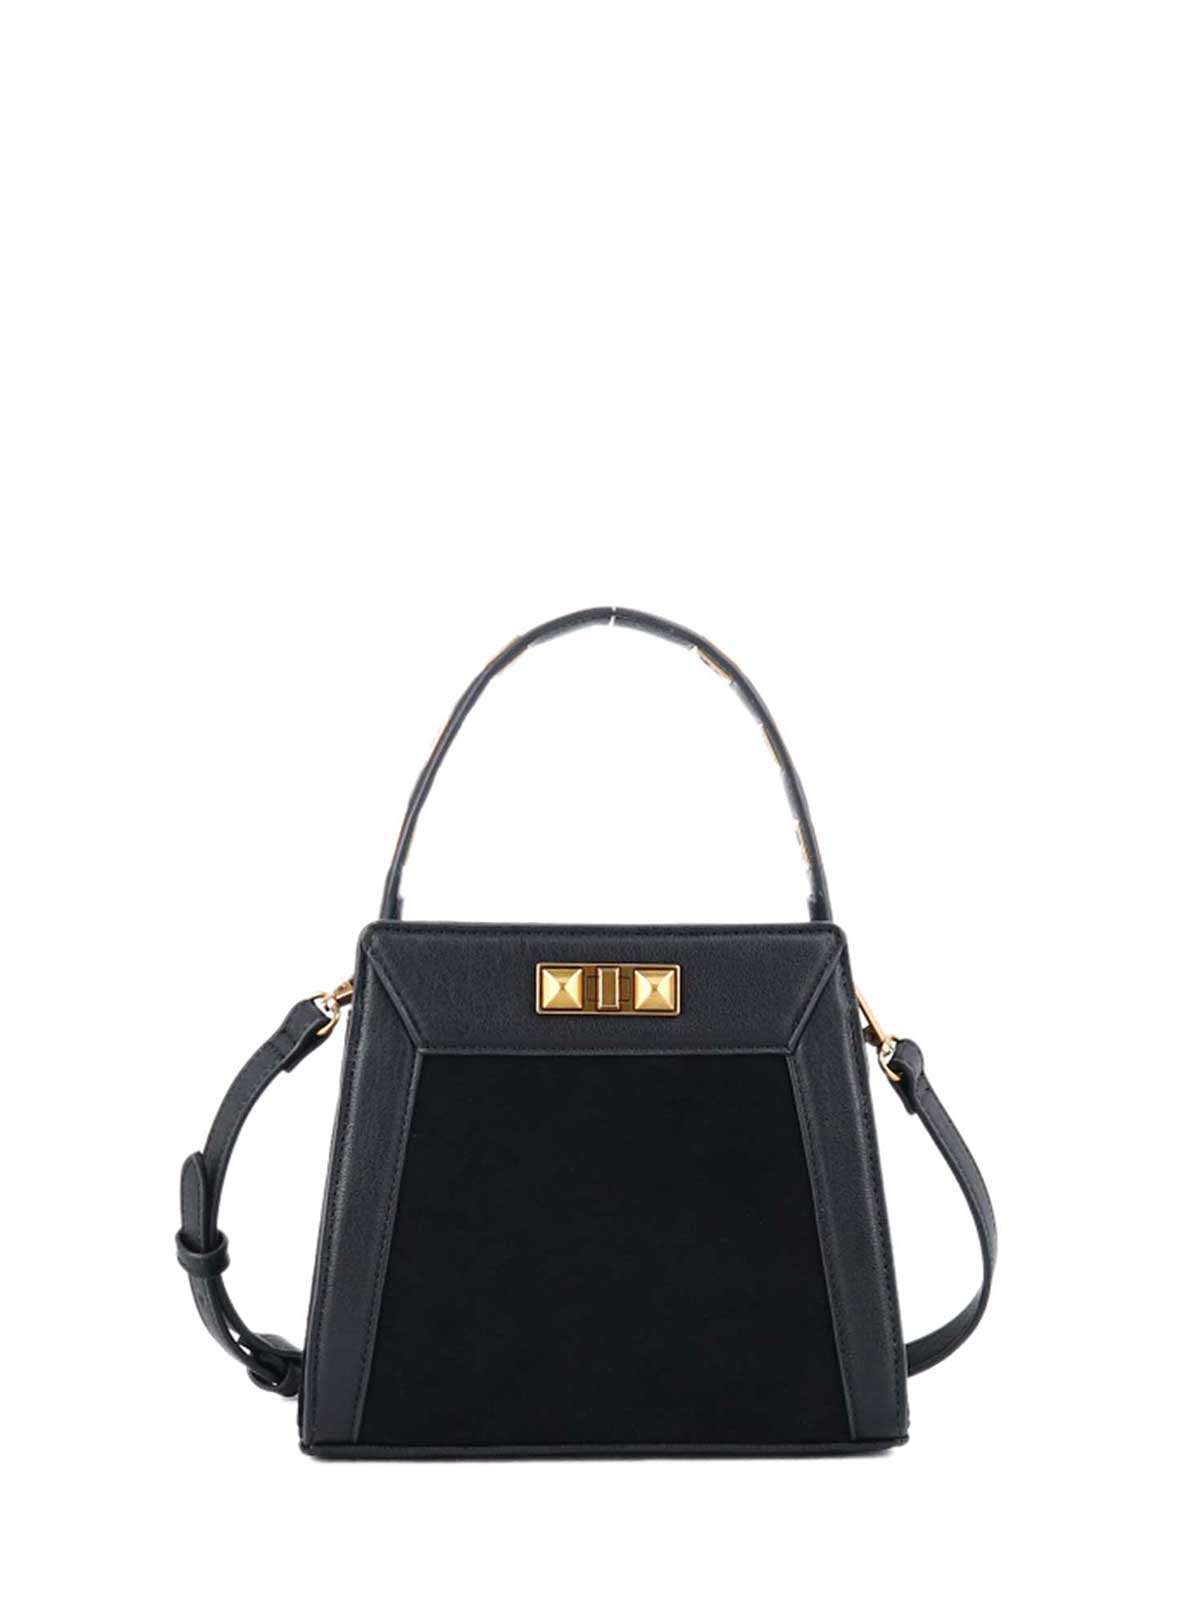 Jessica Simpson black studded bag - Handbags, Purses, and Bags - Zimbio |  Bags, Studded bag, Purses